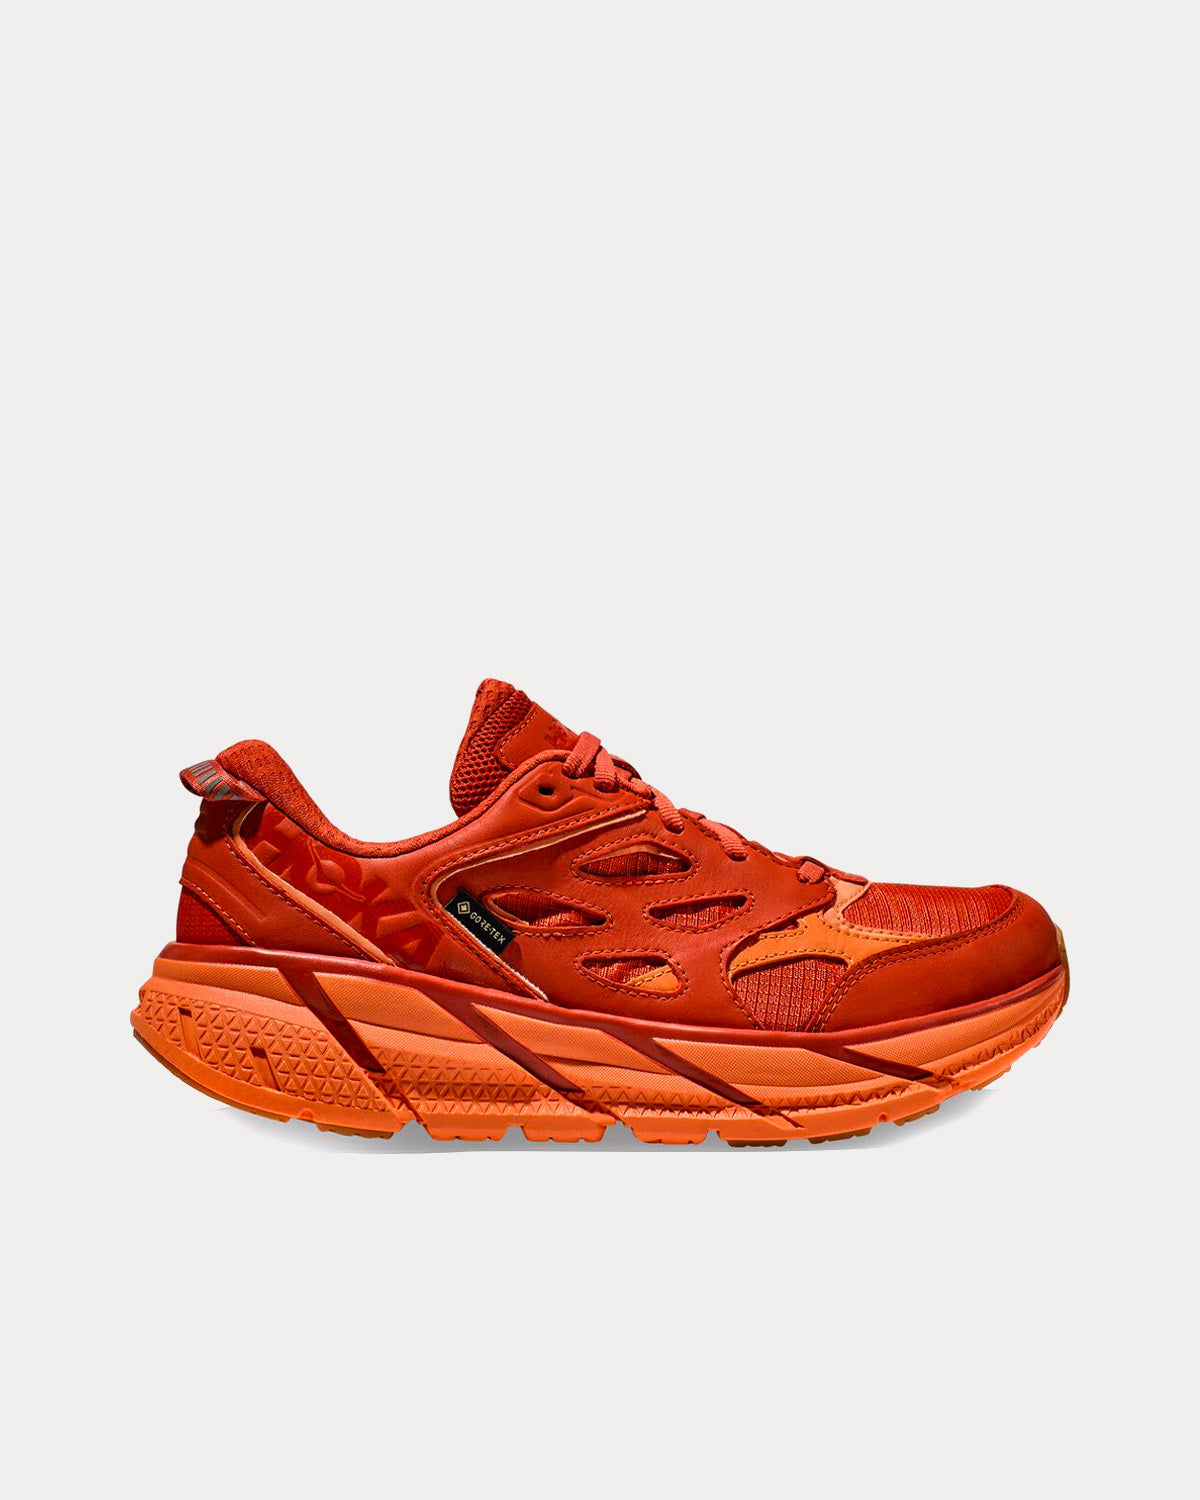 Hoka - Clifton L GORE-TEX Burnt Ochre / Copper Tan Running Shoes